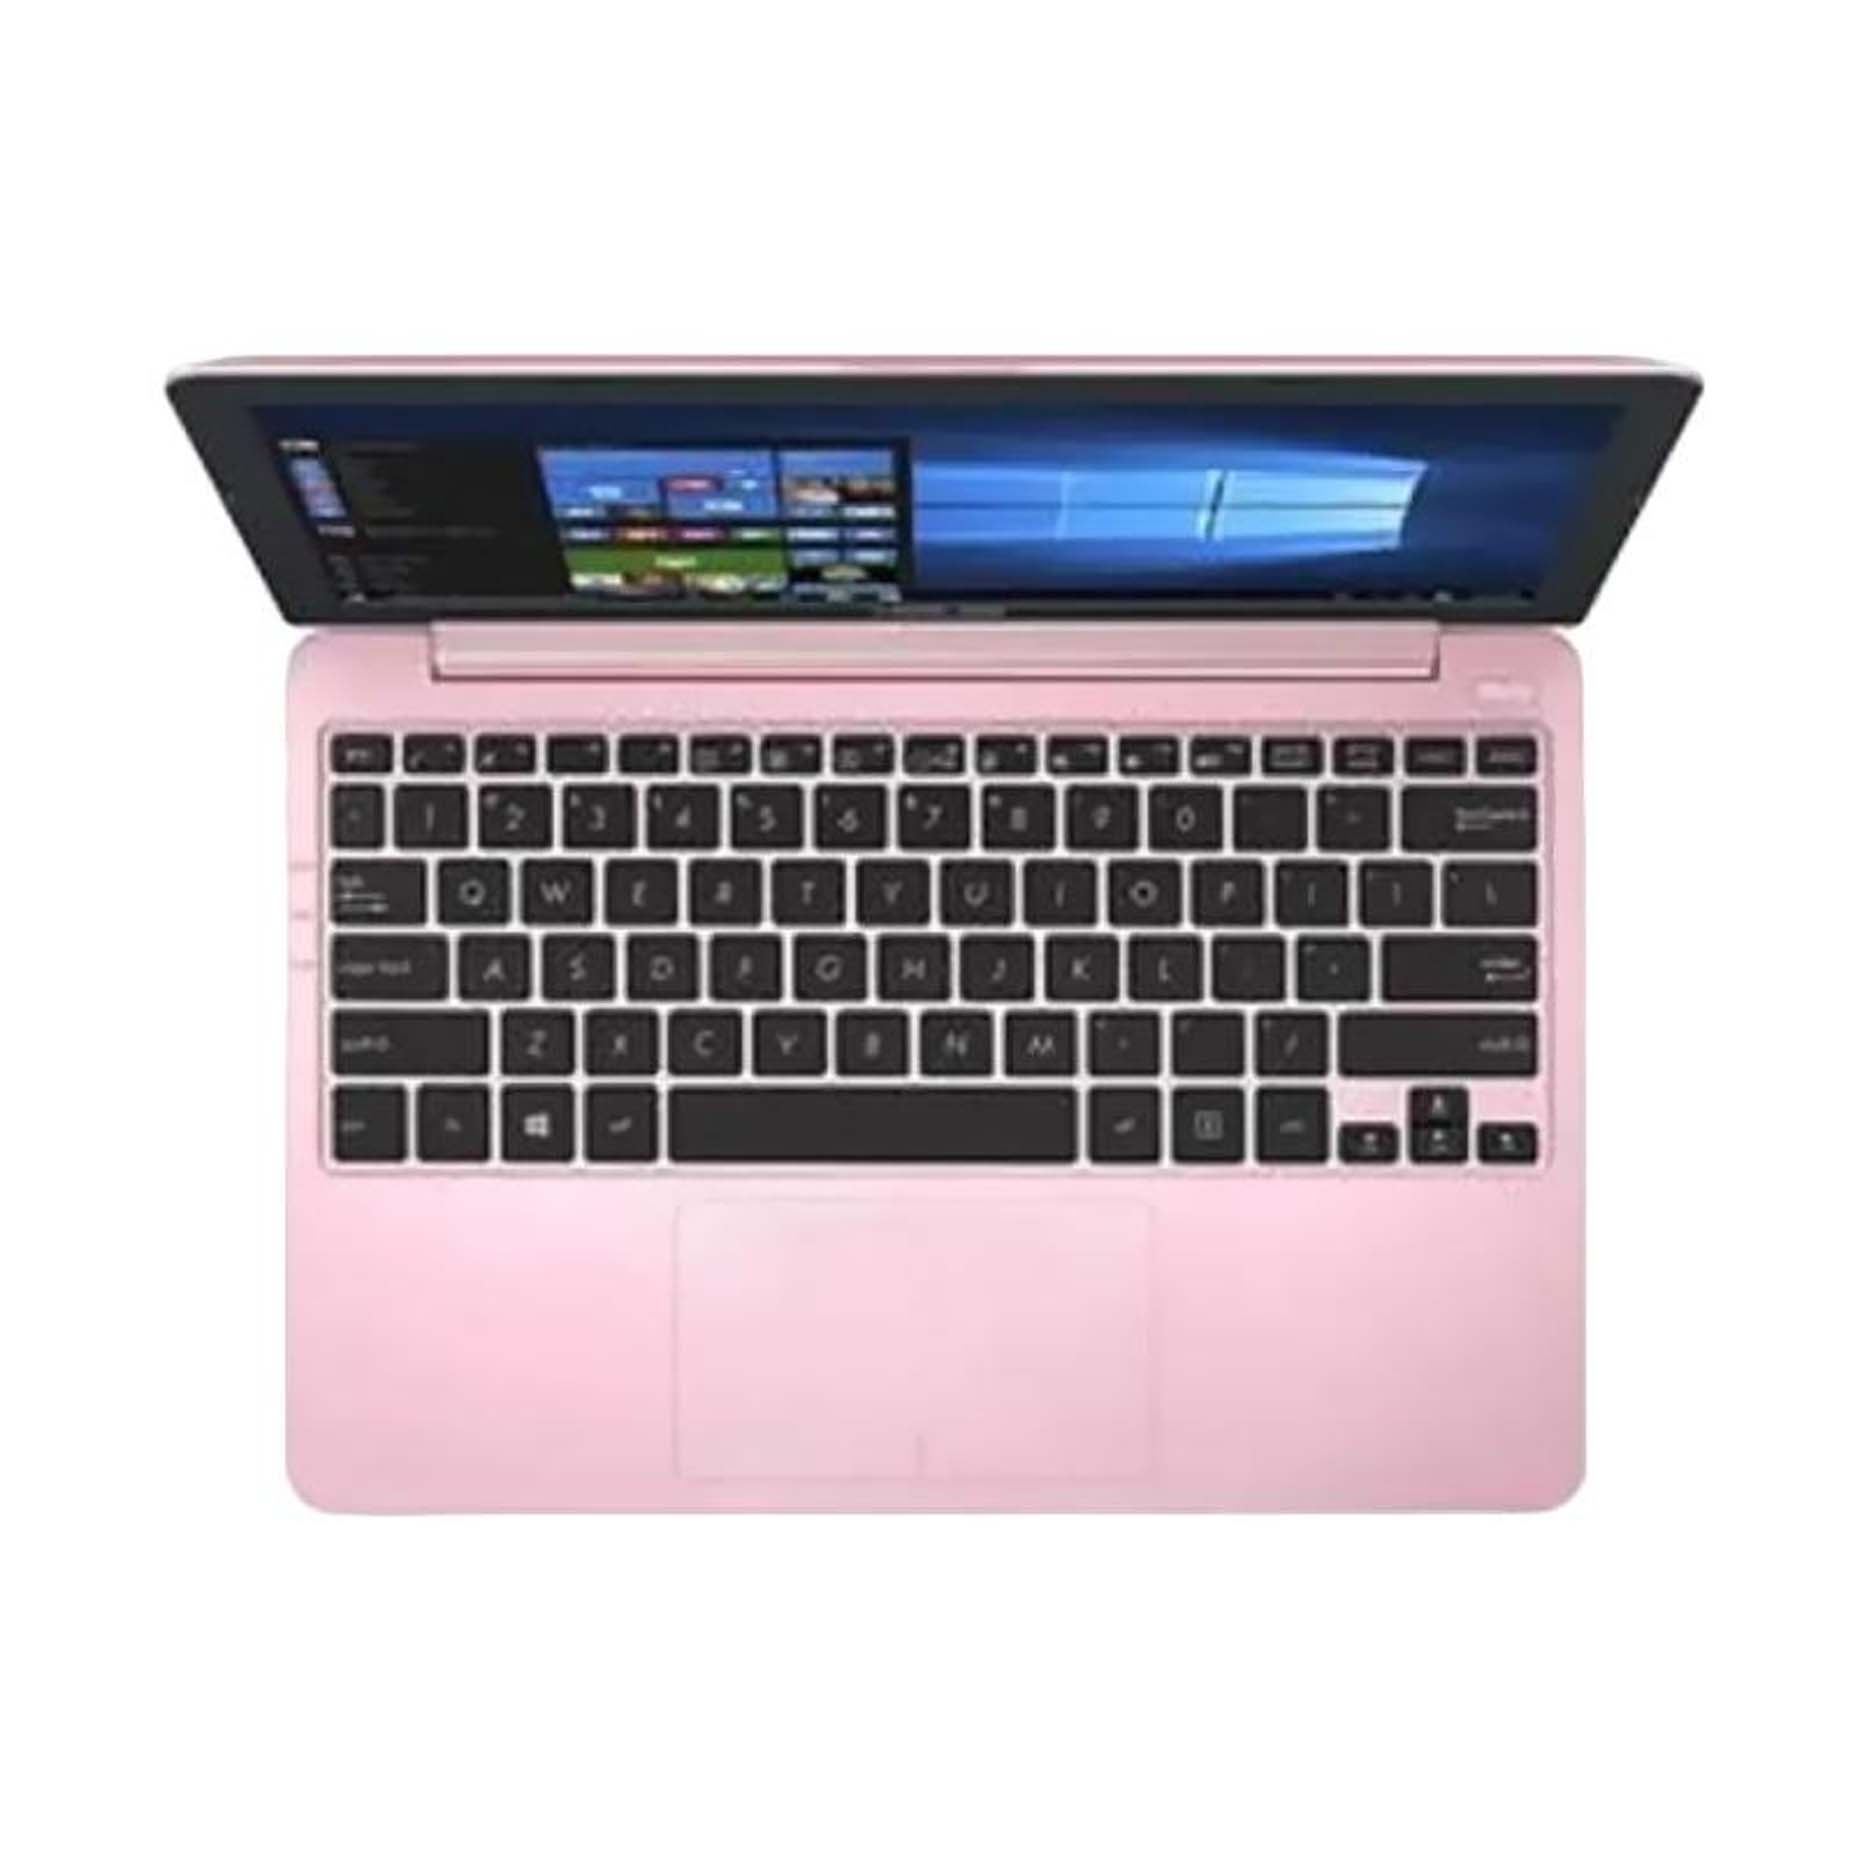 Harga Asus Notebook E203MAH-FD013T Petal Pink Intel Celeron N4000 2GB 500GB 11.6 inch Win 10